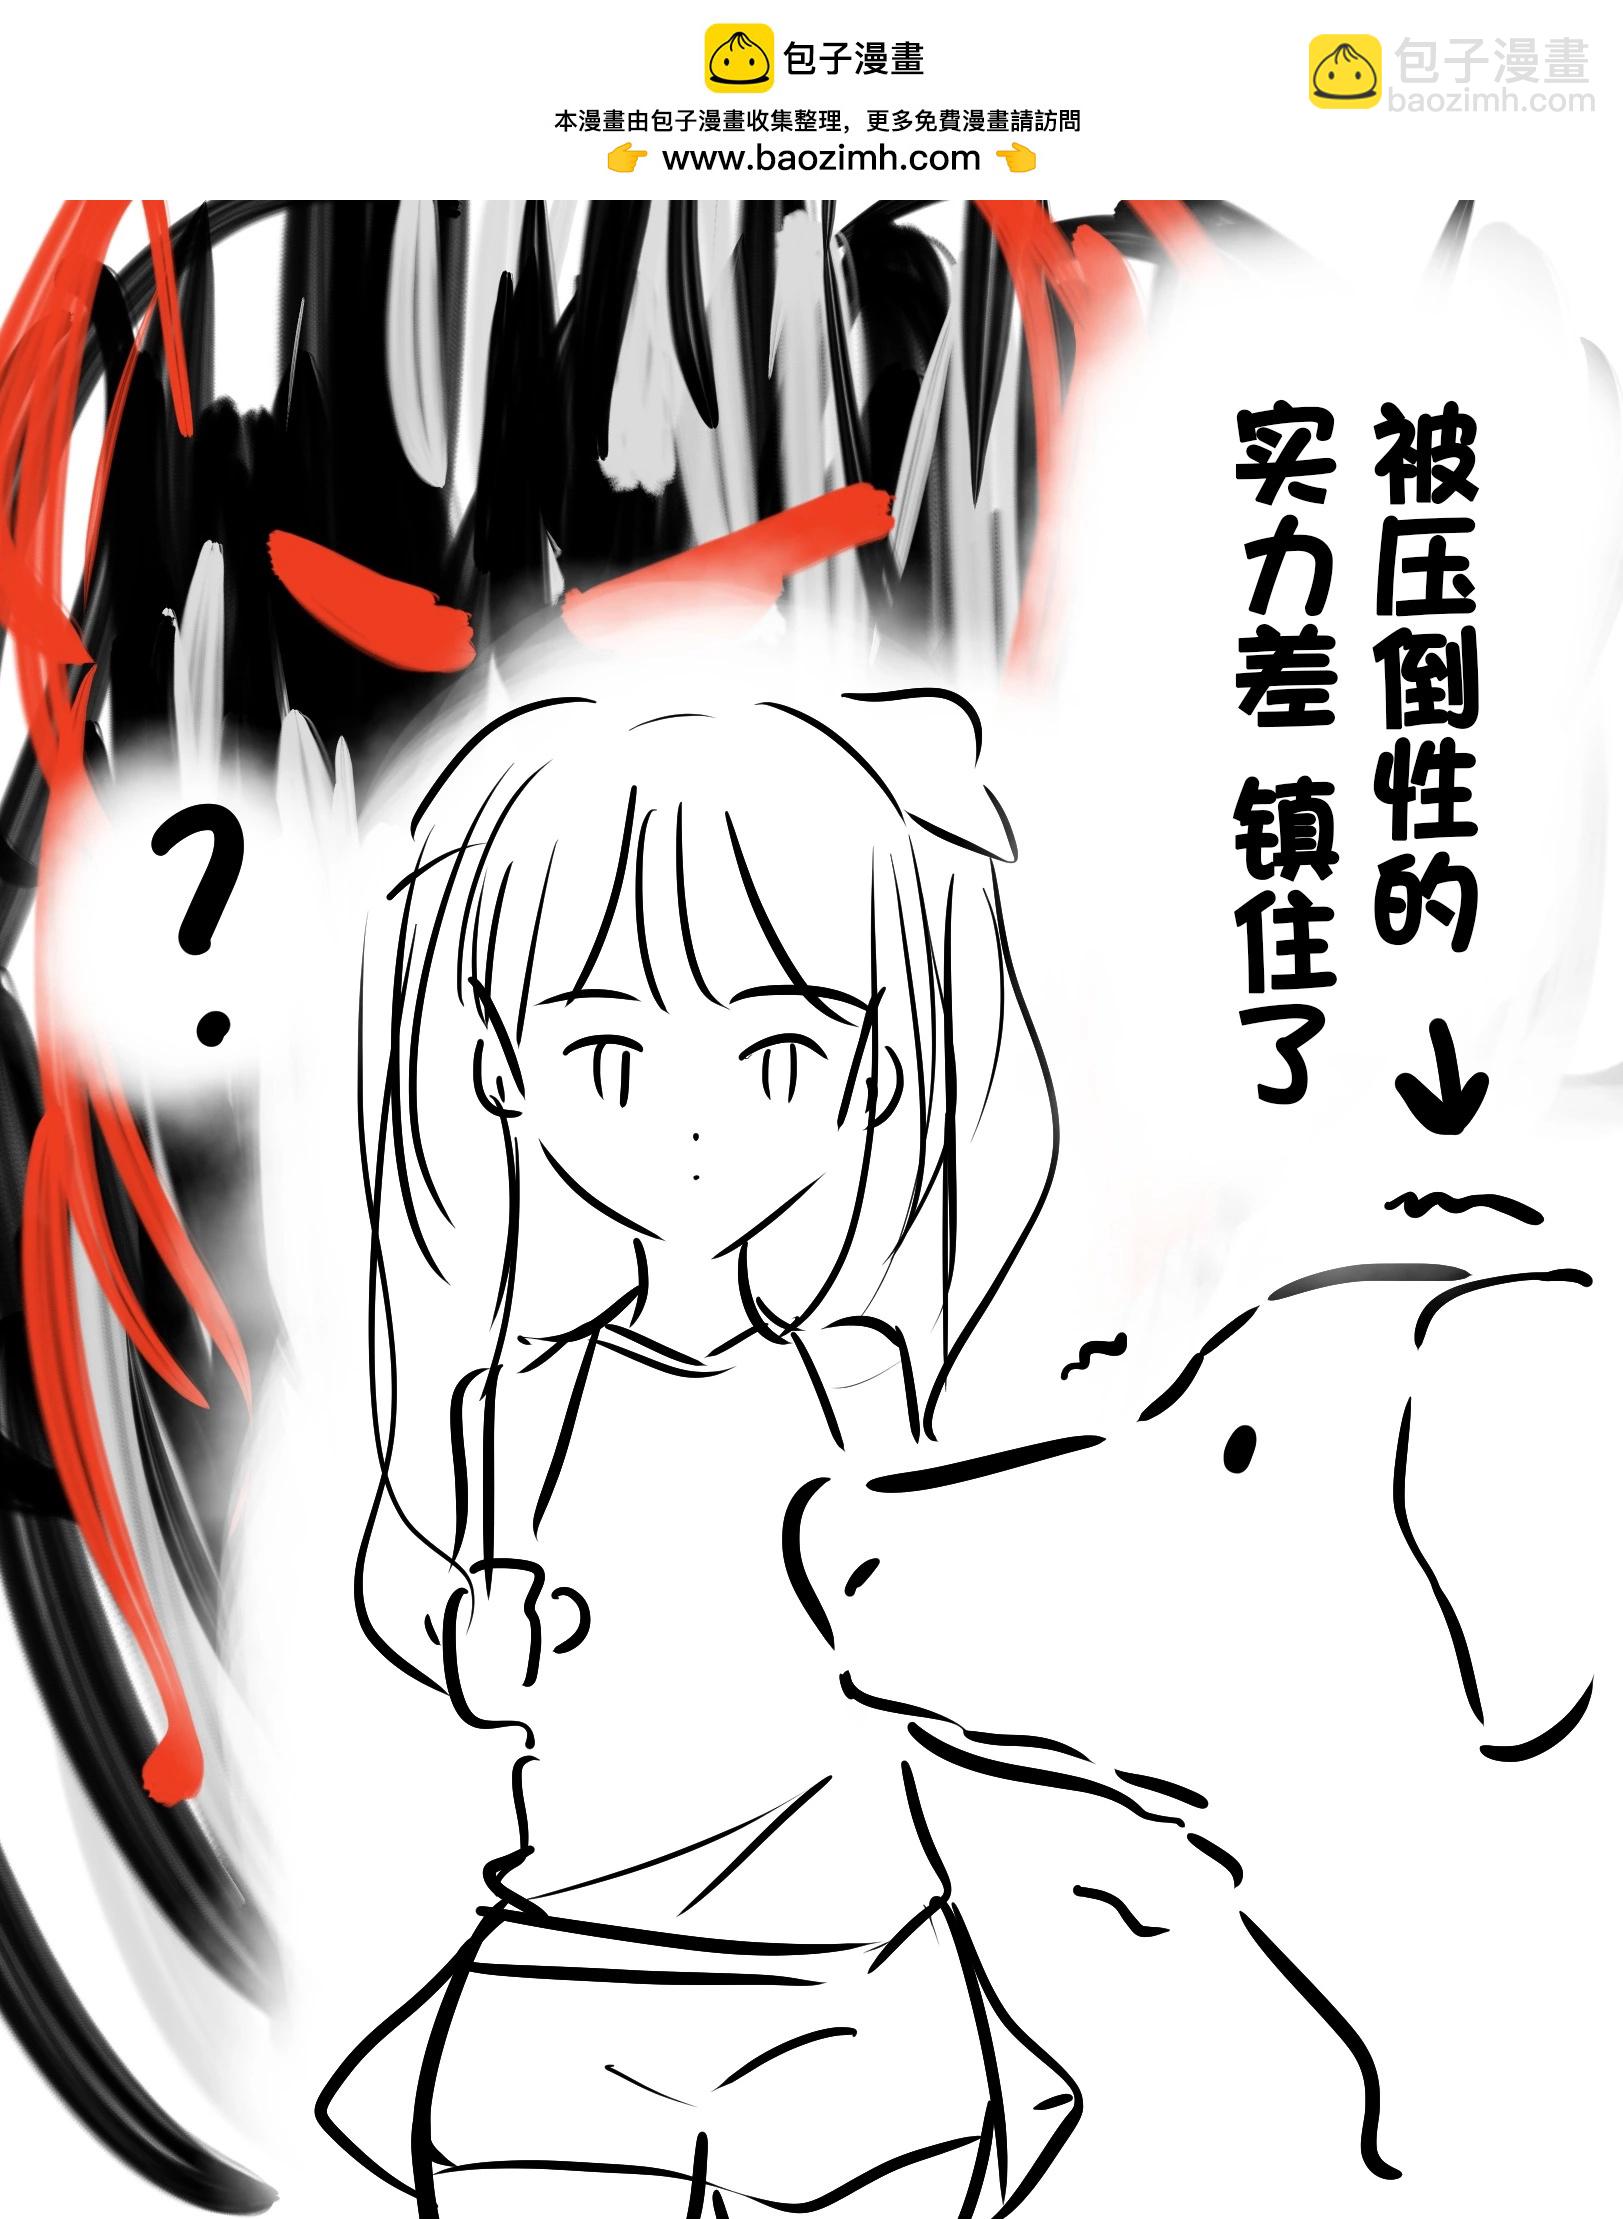 カコミスル老师四格合集 - 魔法少女小雪和大型犬 - 1